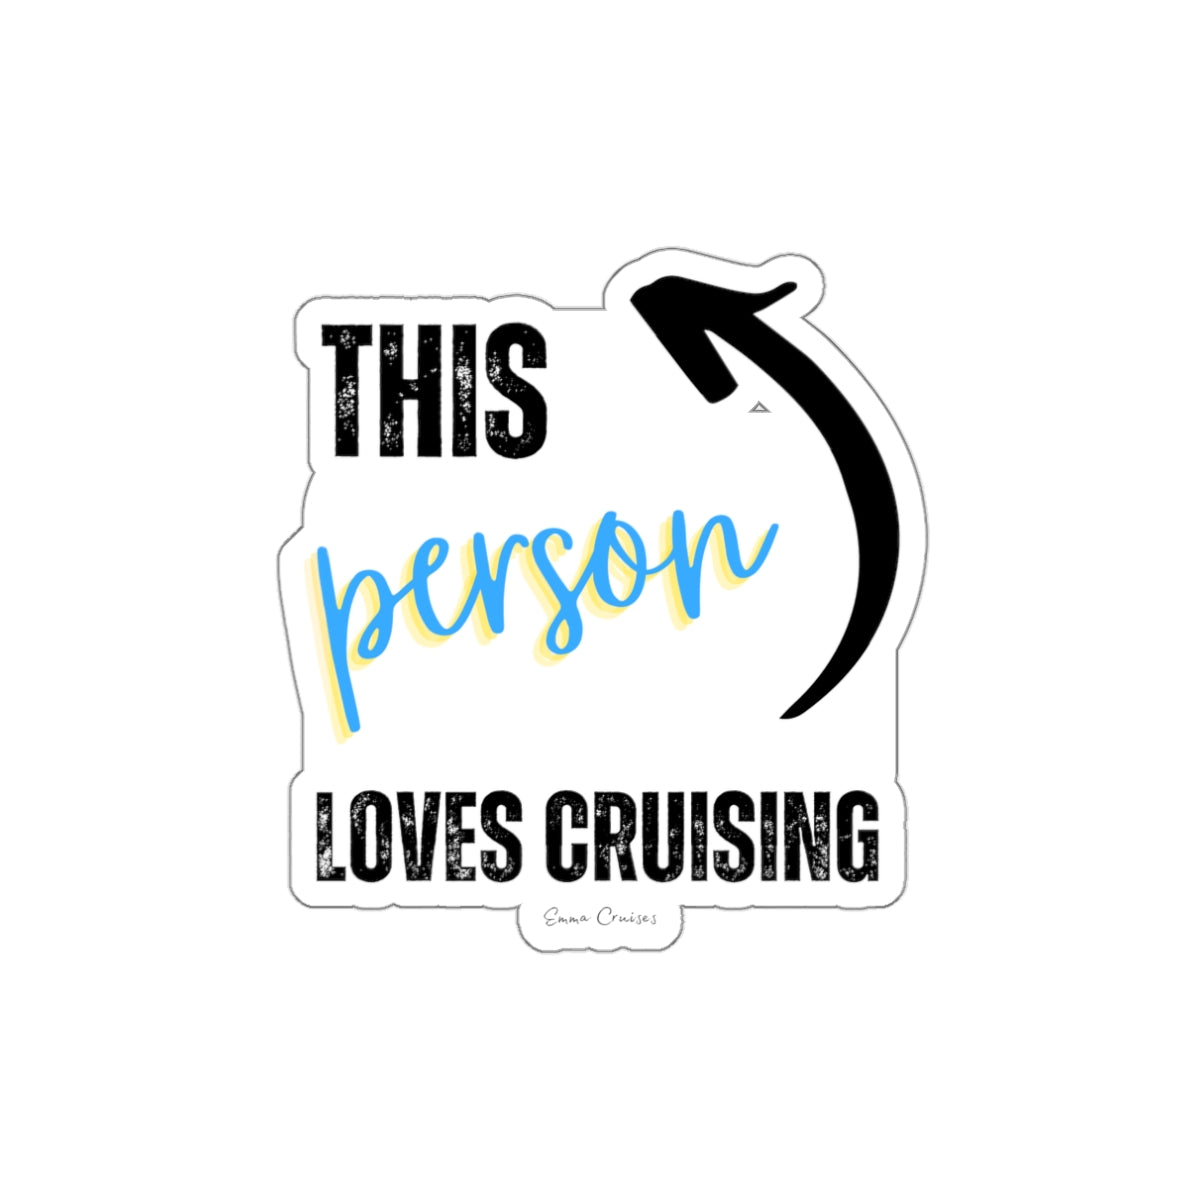 This Person Loves Cruising - Die-Cut Sticker